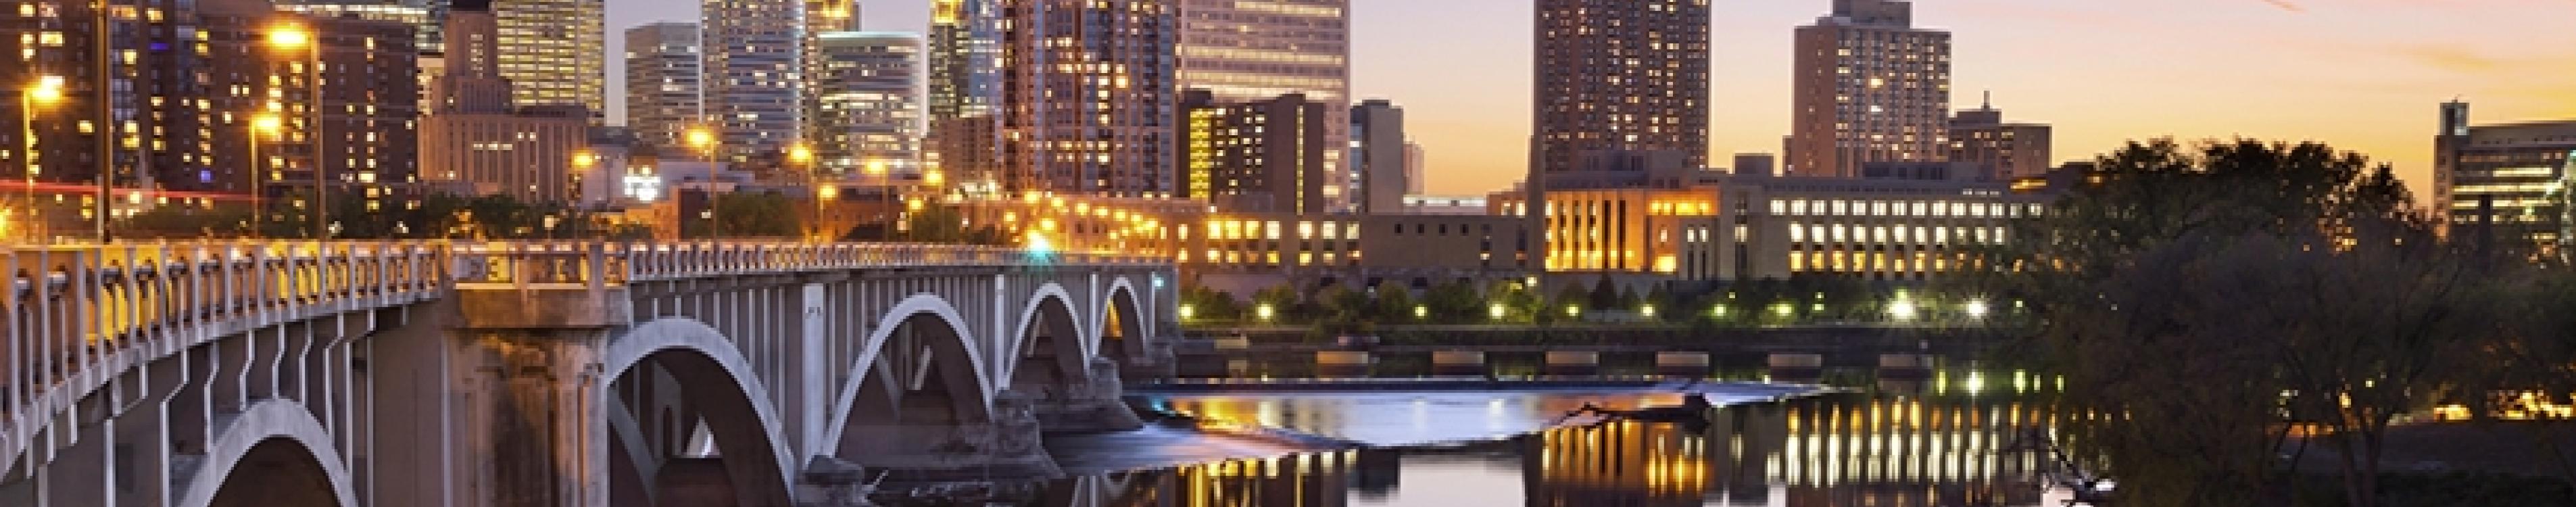 Downtown Minneapolis skyline at night